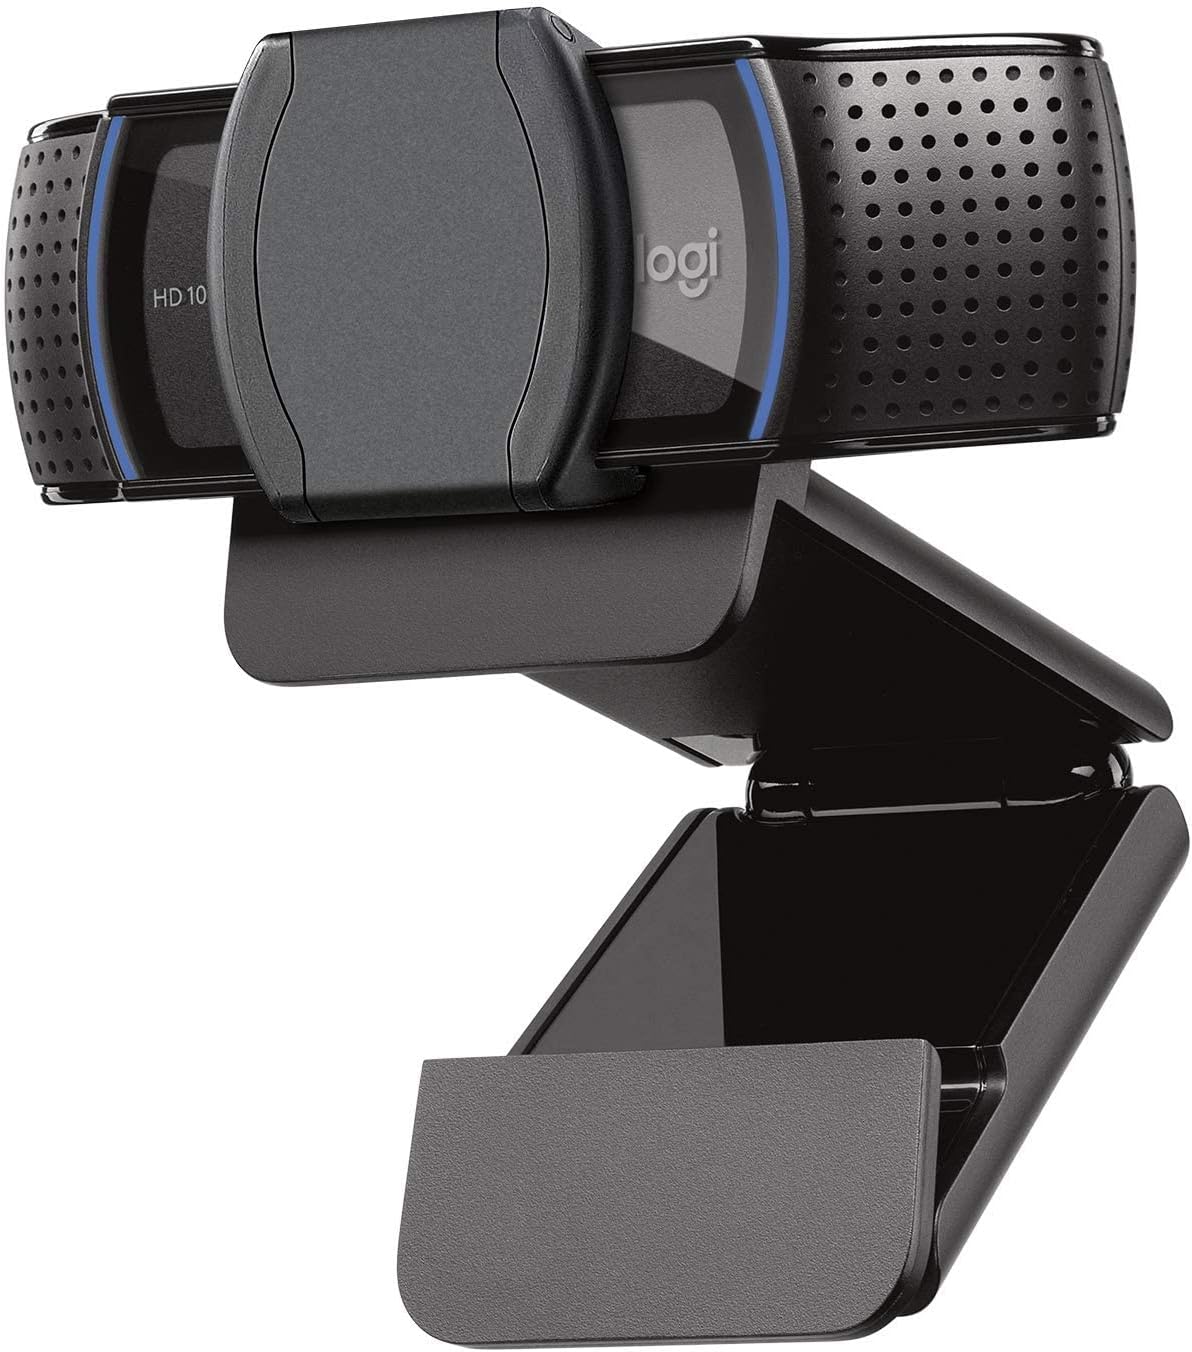 Logitech C920e BUSINESS WEBCAM 1080p business webcam perfect for mass deployment 3-year limited hardware warranty